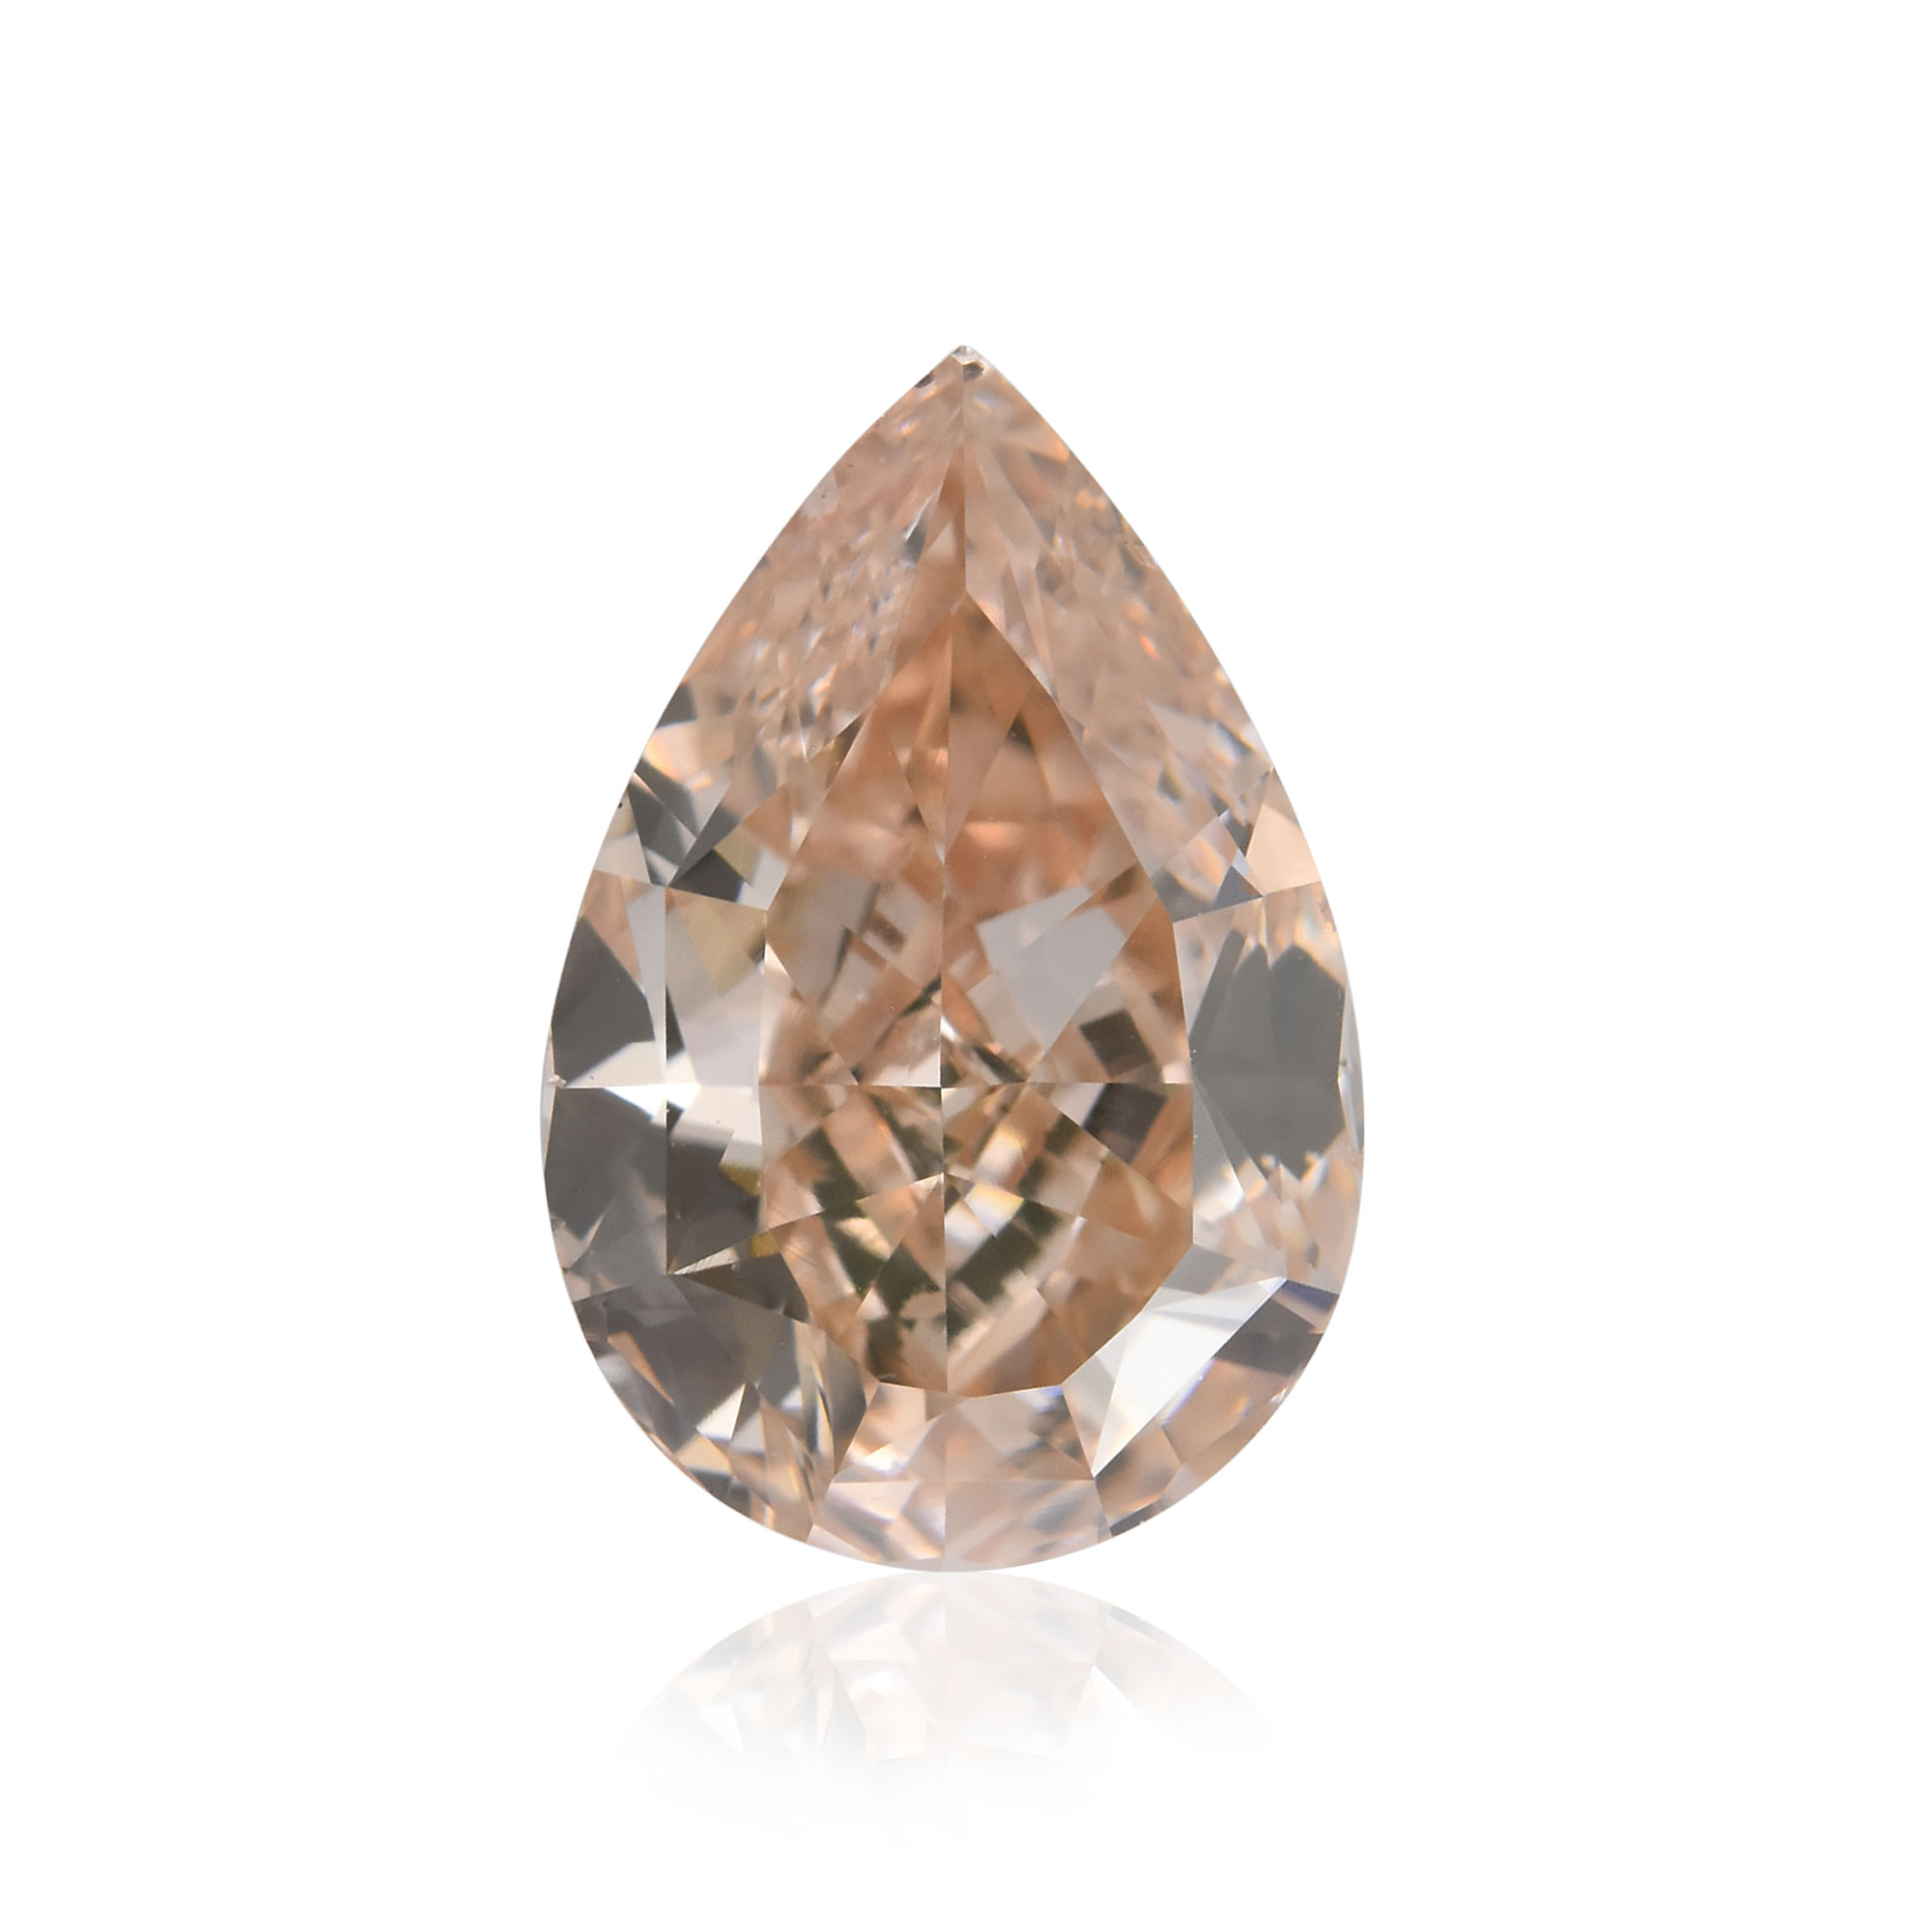 1.70 carat, Fancy Pink Brown Diamond, Pear Shape, VS2 Clarity, GIA, SKU  385490